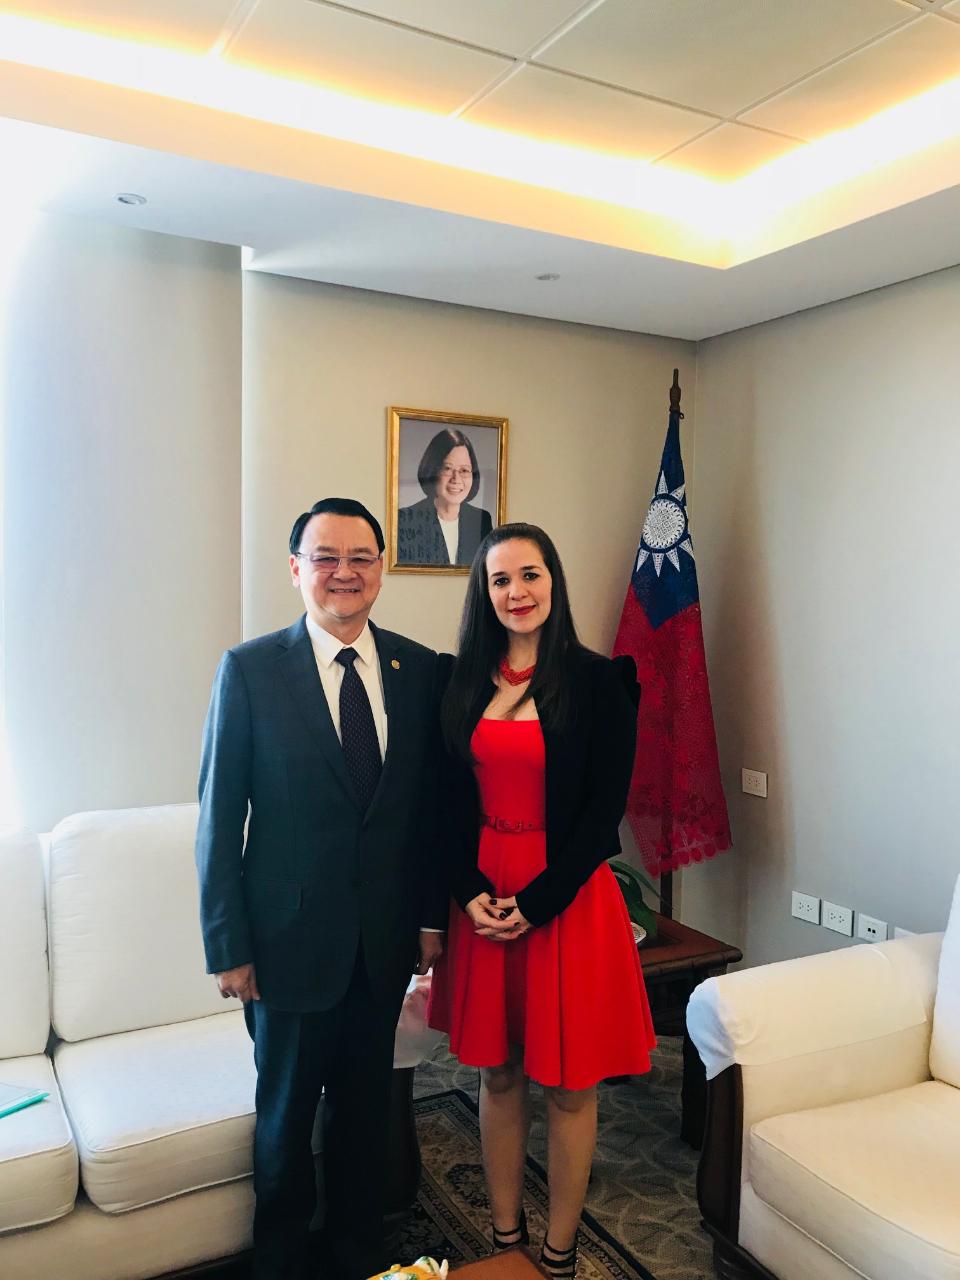 La fiscal del estado, Pamela Pérez visitó al Embajador de la República de China (Taiwán), Dr. Diego L. Chou el día 7 de septiembre, 2018.